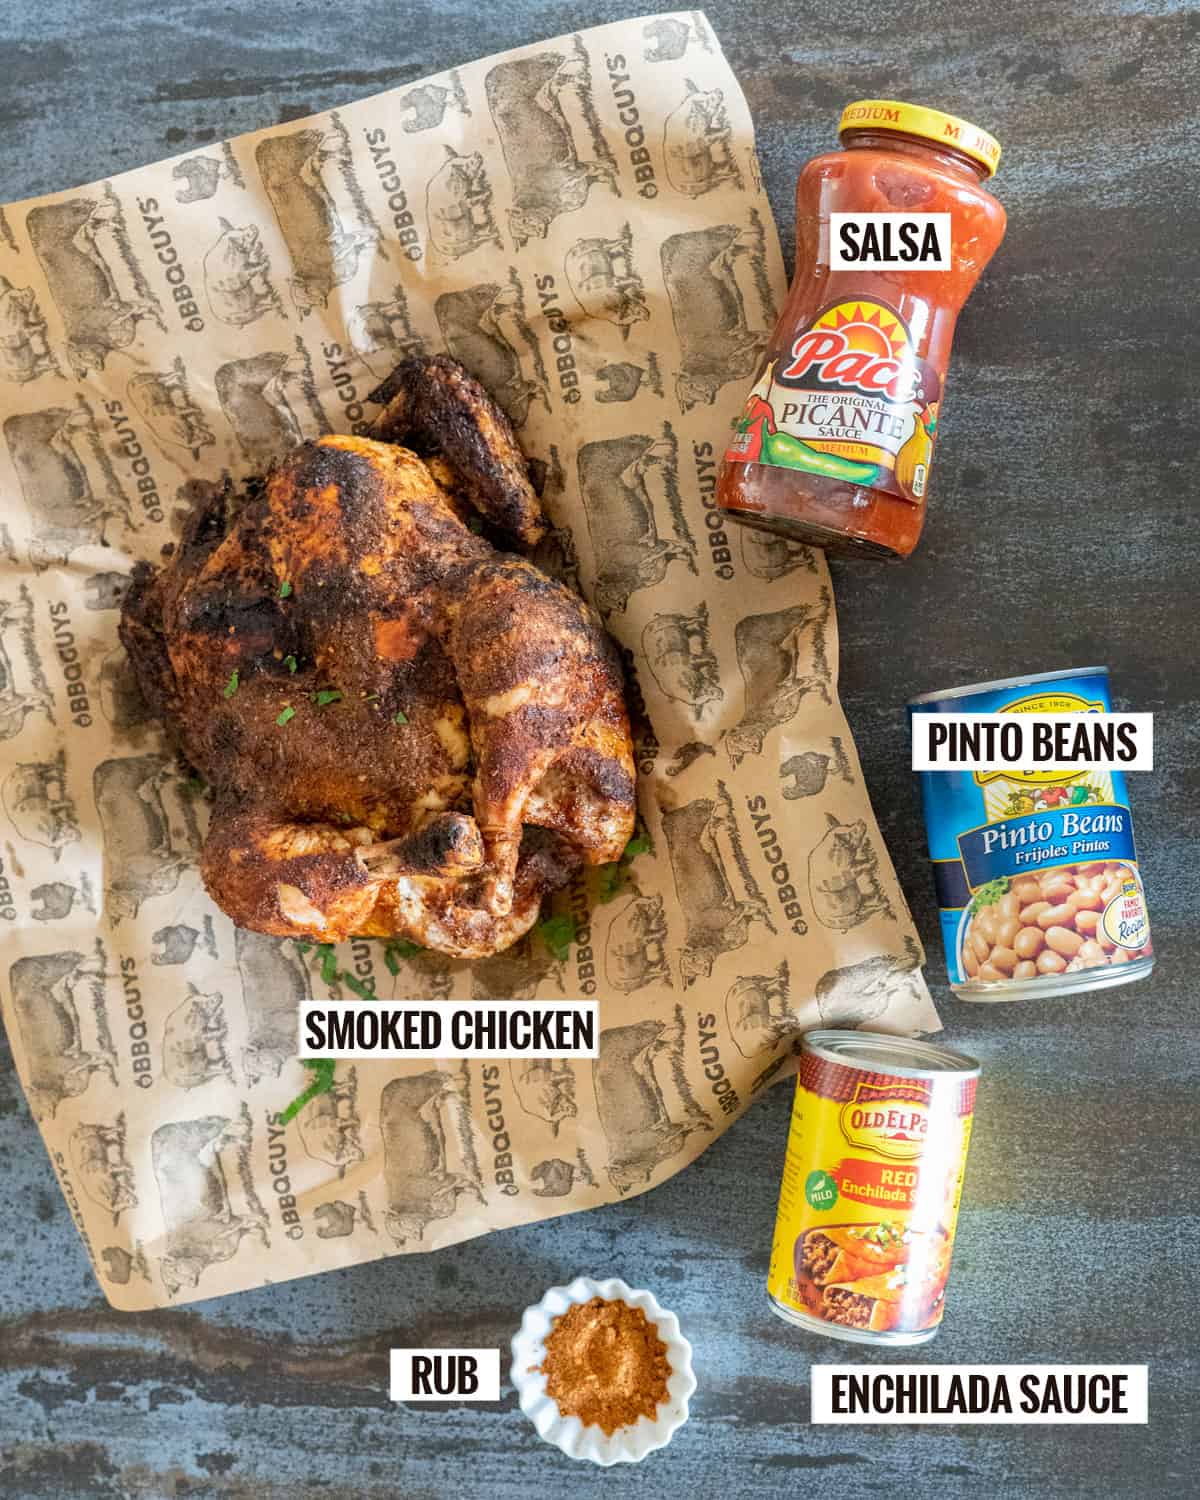 chicken chili ingredients: roasted chicken, salsa, pinto beans, enchilada sauce, rub.